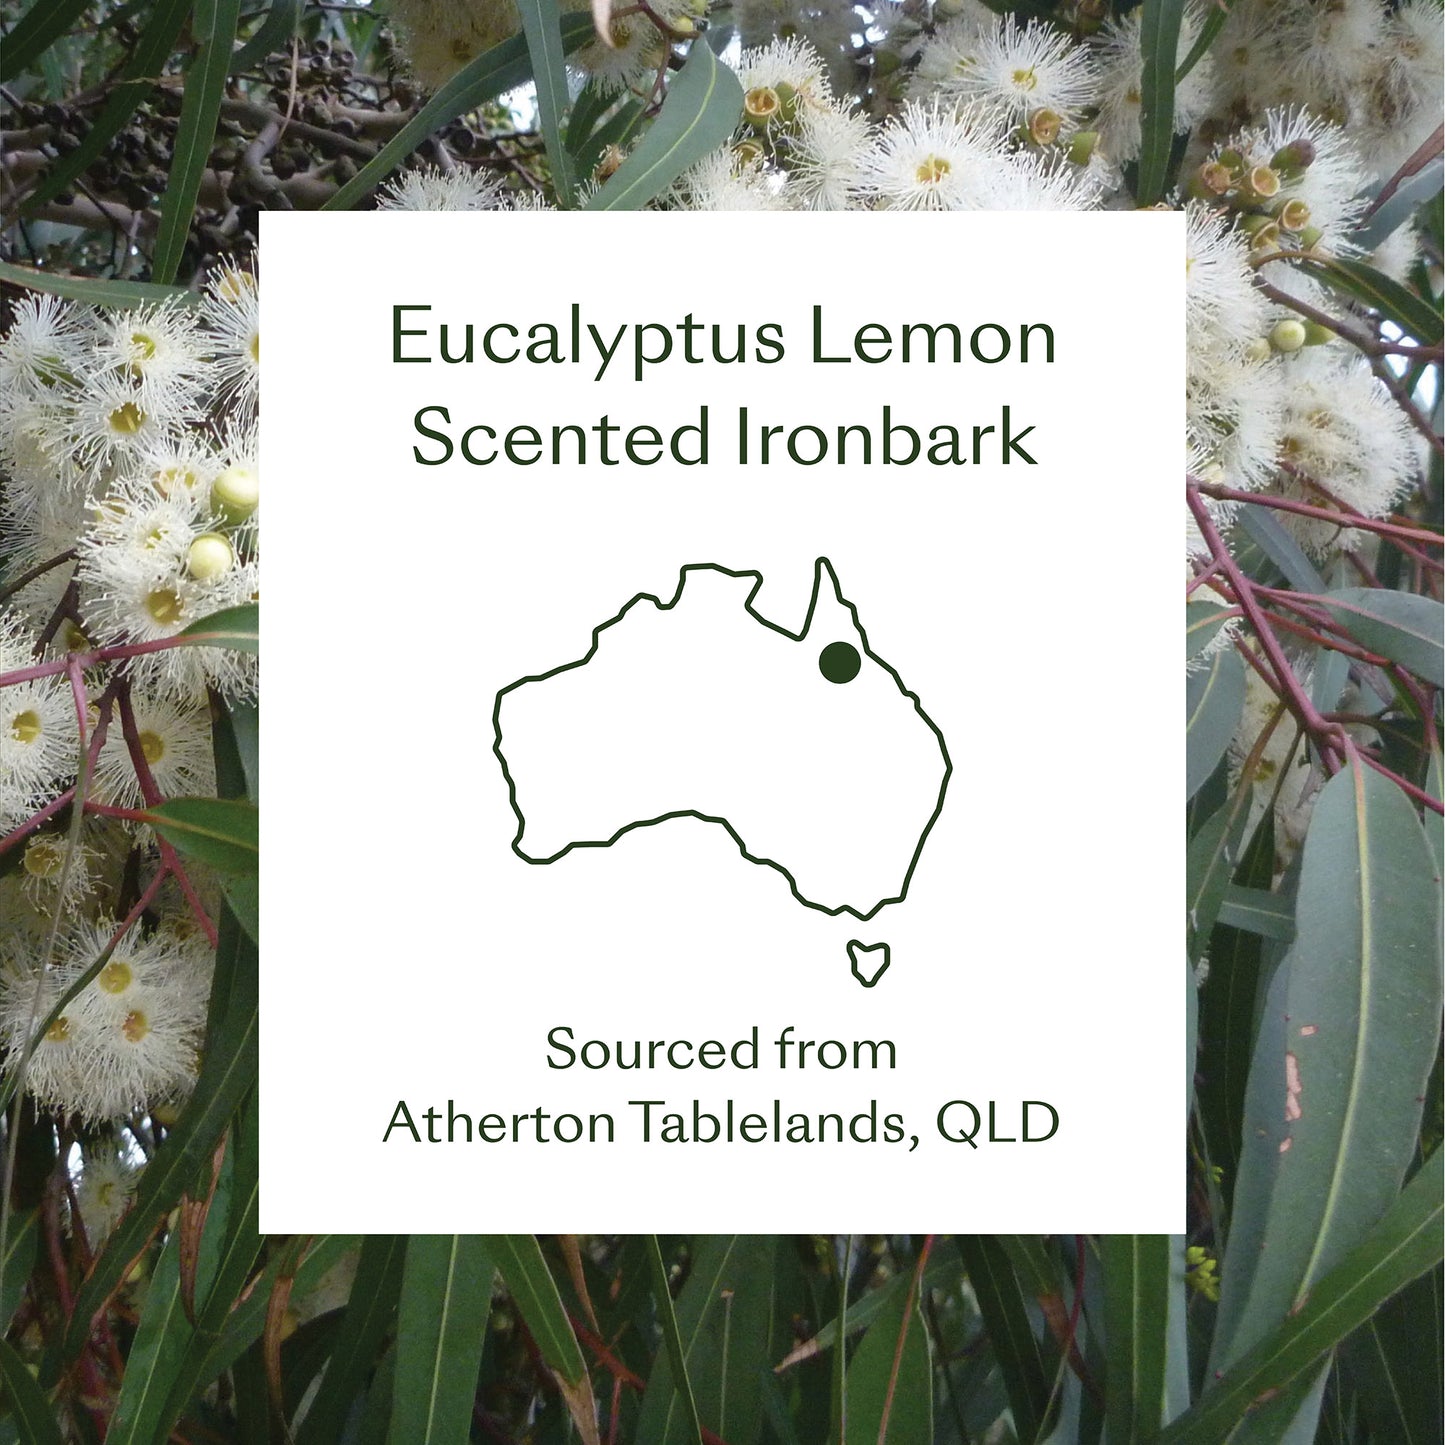 
                  
                    Eucalyptus Lemon Scented Ironbark Essential Oil
                  
                